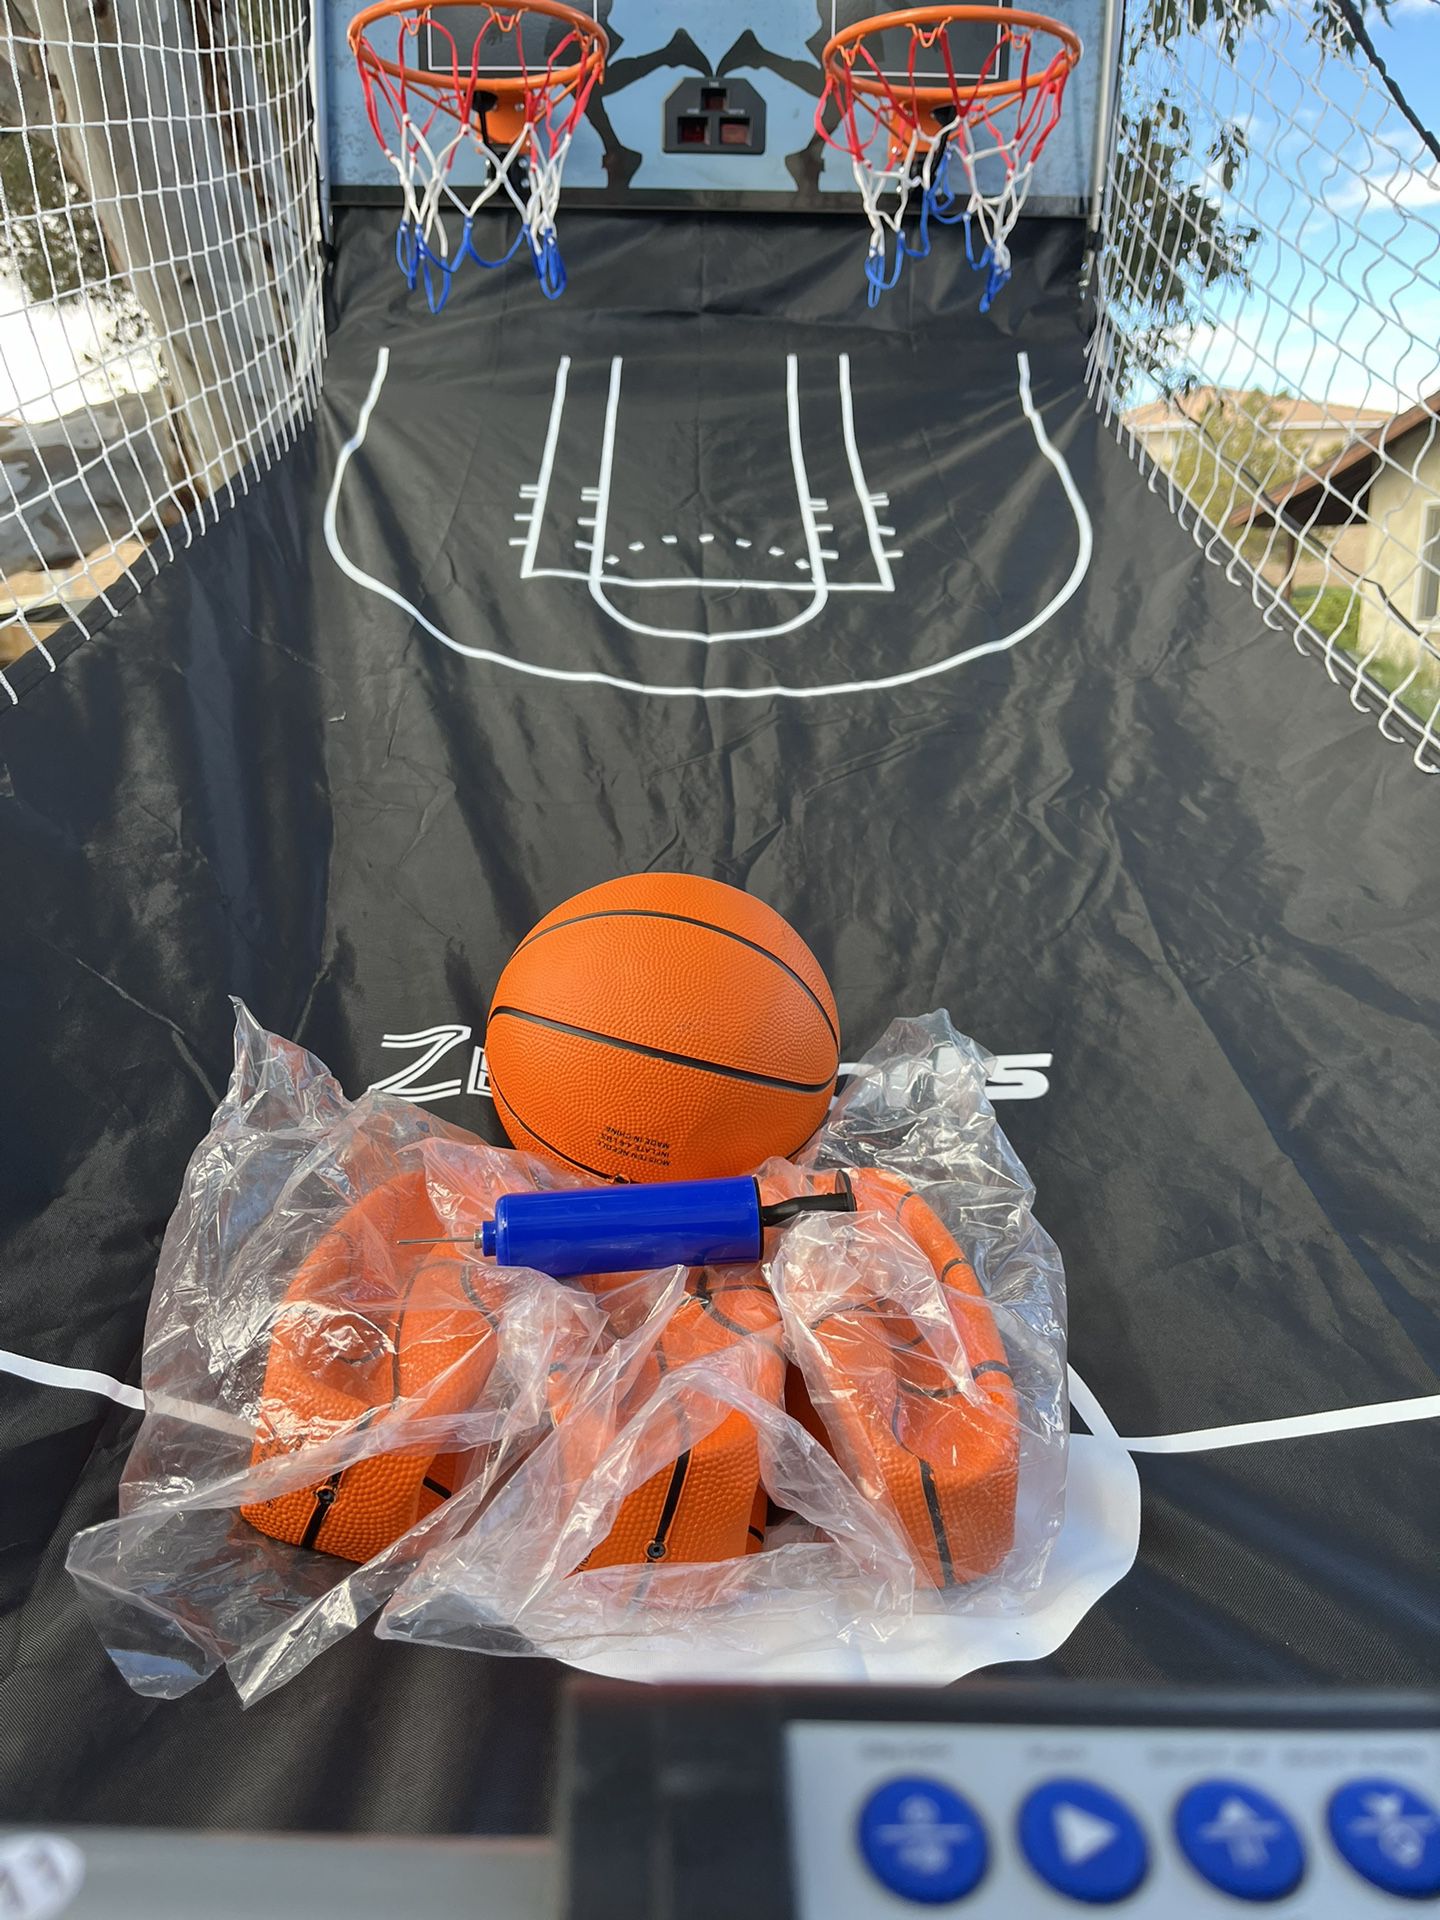 Brand: JungleA Electronic Home Arcade Basketball Game, Indoor Foldable Basketball Hoop, Double Shot, LED Double Shot Scoreboard, 2 Players, 4 Basketba